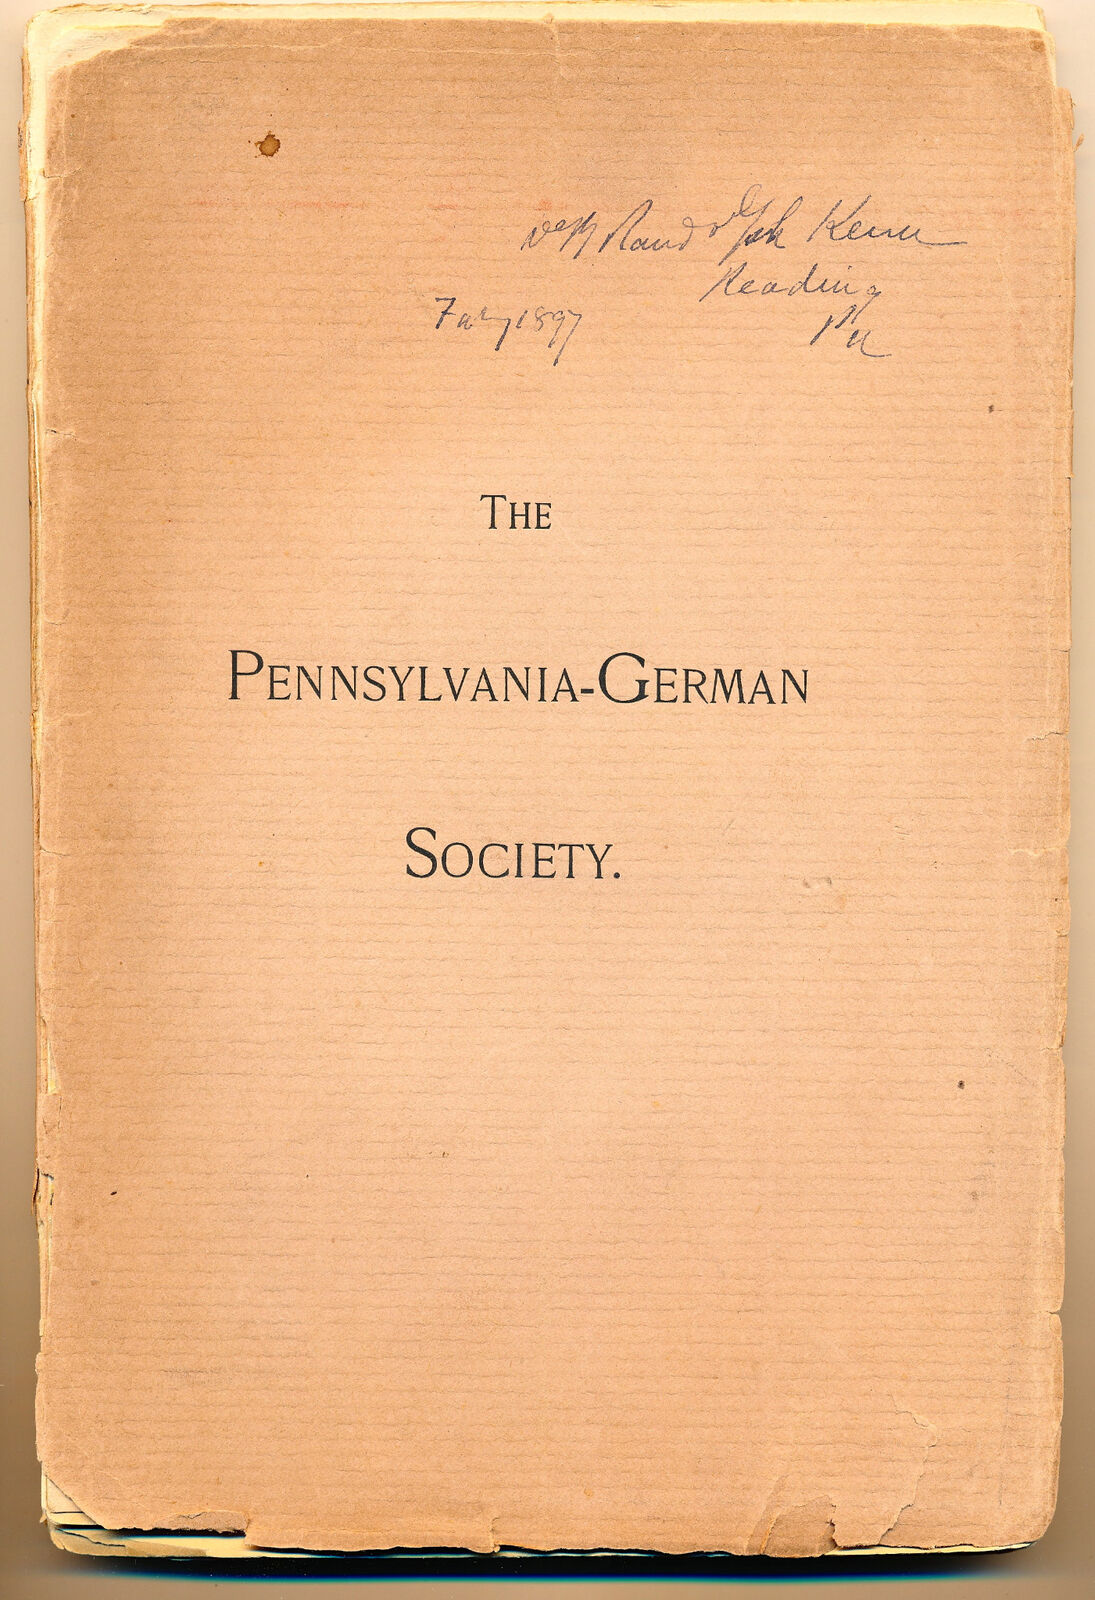 ORIGINAL BOOK - THE PENNSYLVANIA-GERMAN SOCIETY - 1891 - LANCASTER APRIL 15th